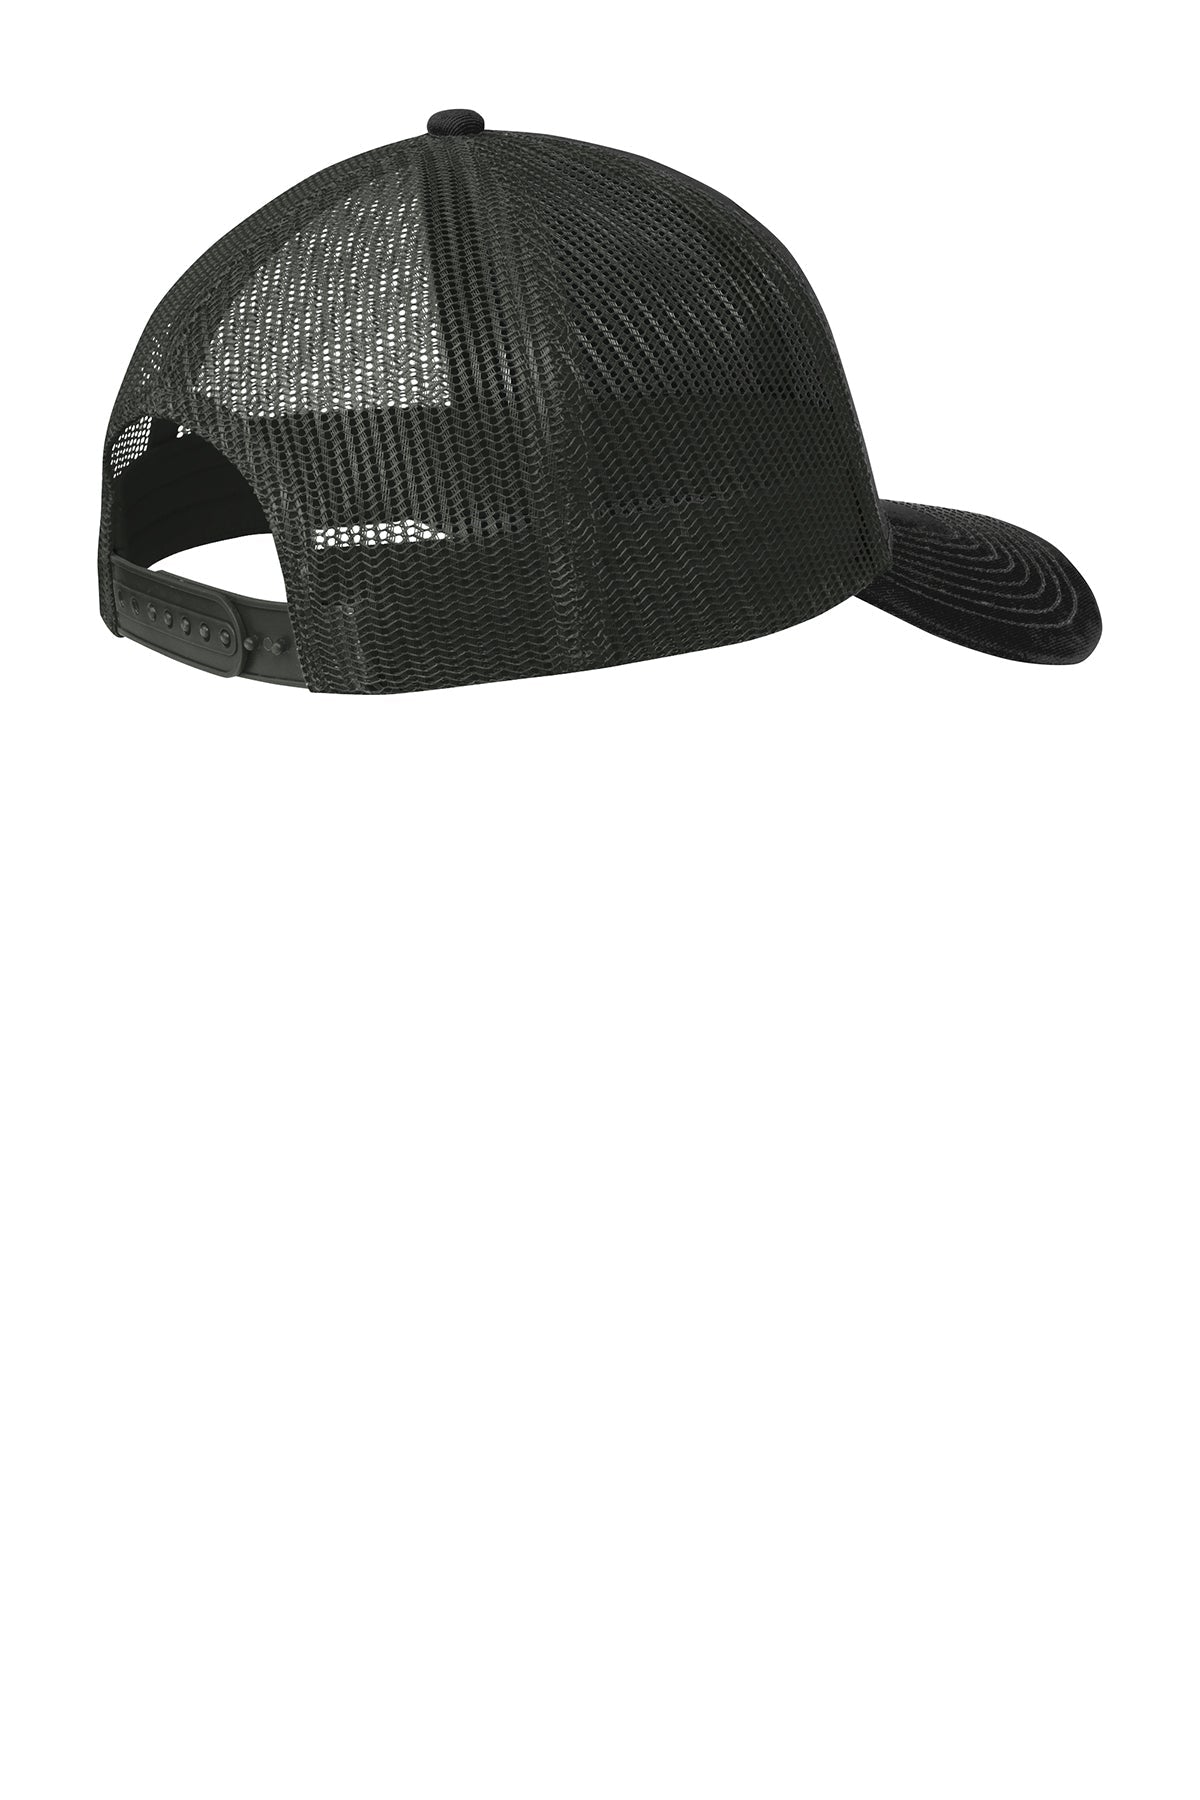 Port Authority Snapback Trucker Branded Caps, Black/ Grey Steel